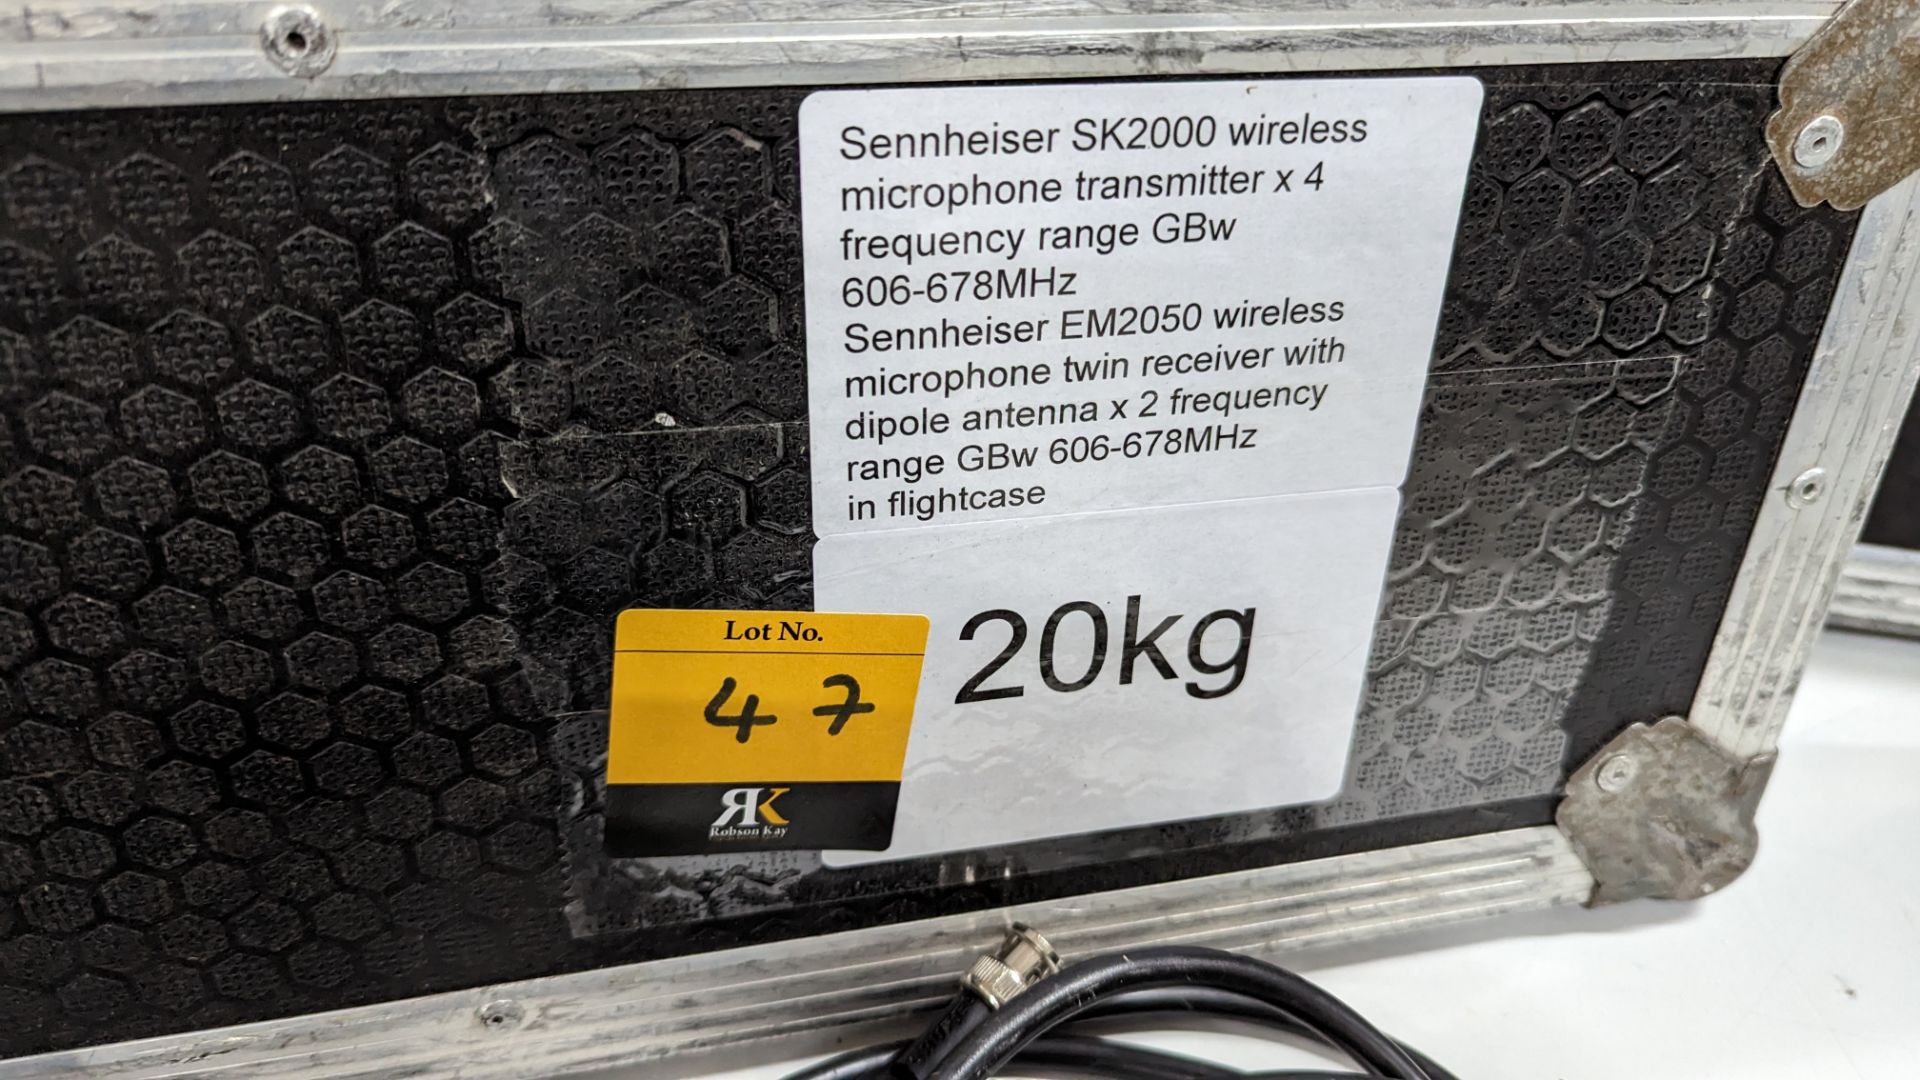 Sennheiser wireless microphone equipment comprising 2 off Sennheiser EM2050 rack mounted wireless mi - Image 7 of 15